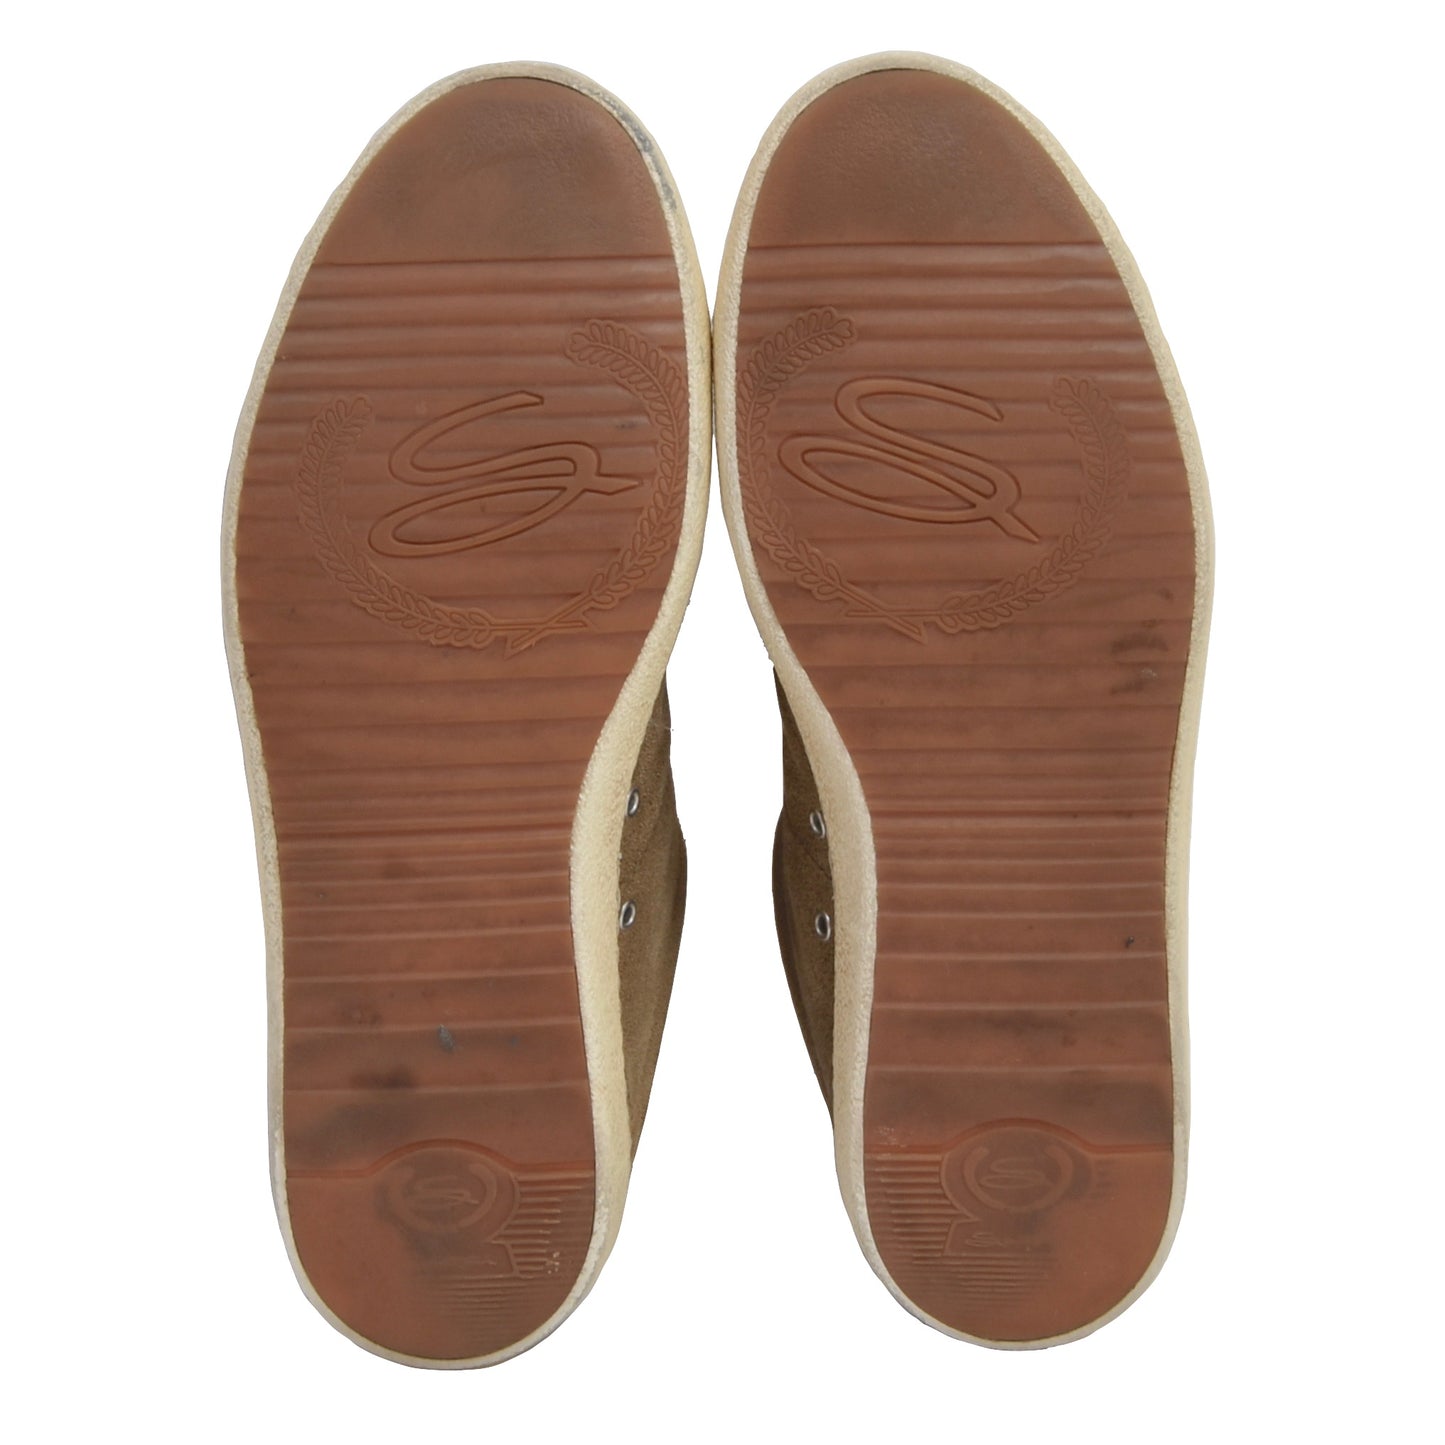 Santoni Leather Sneakers Size 7.5 - Brown